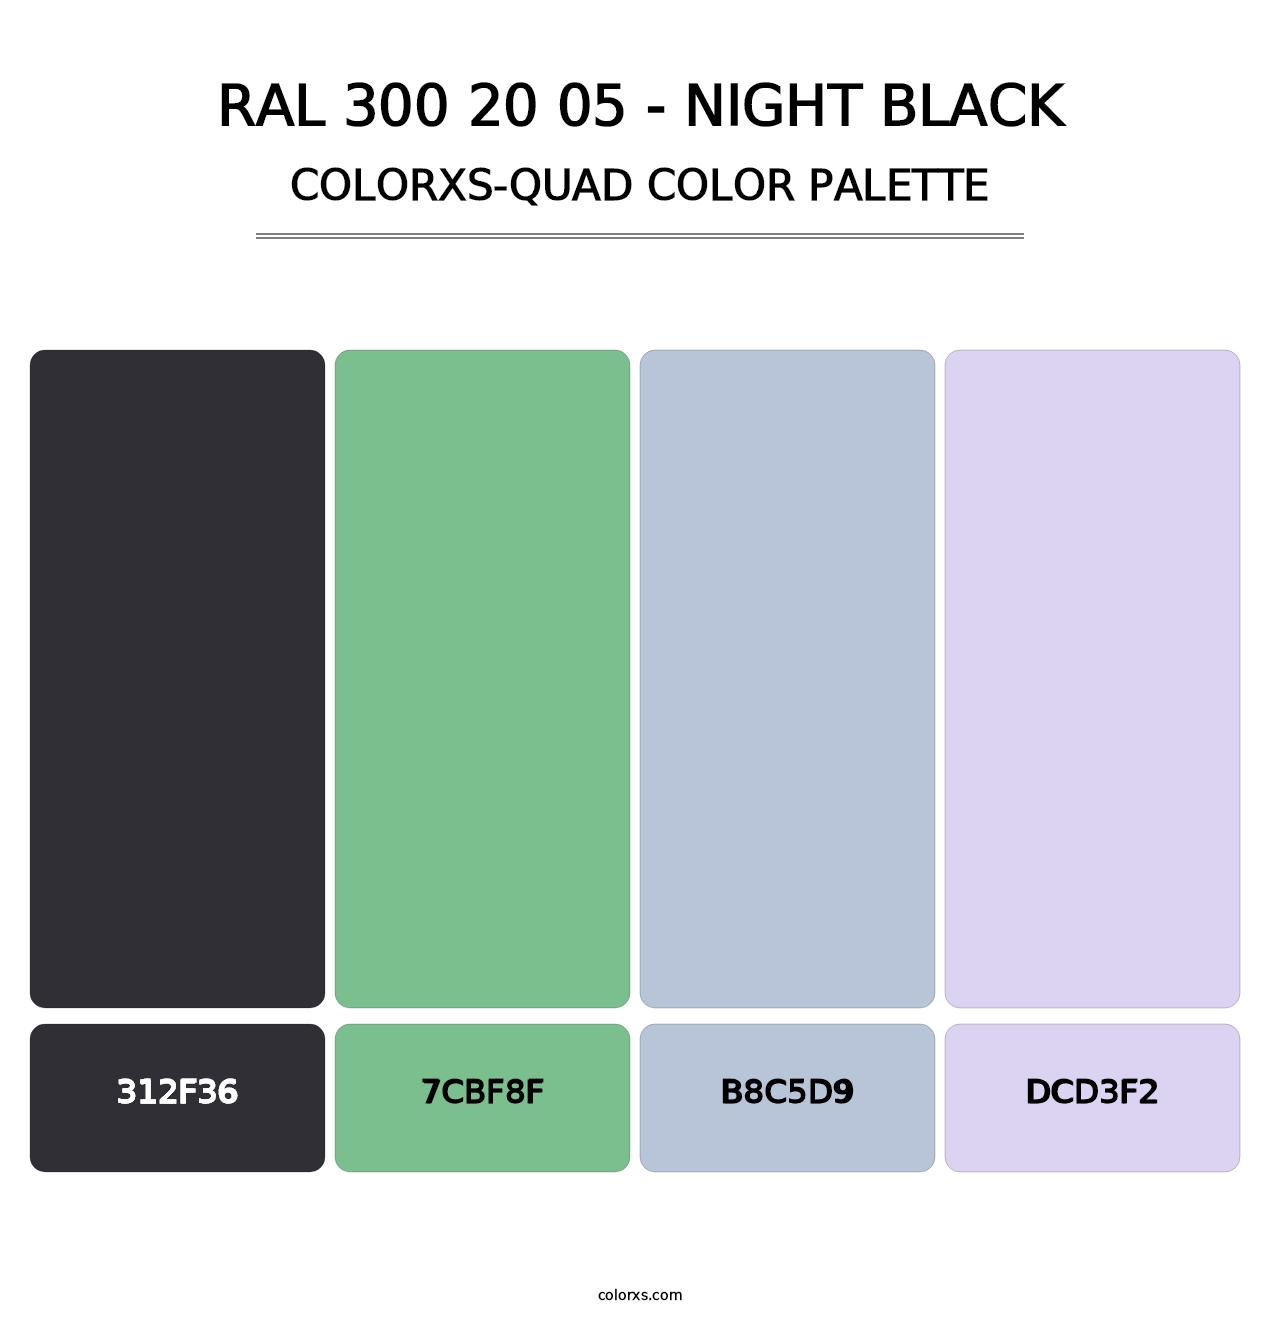 RAL 300 20 05 - Night Black - Colorxs Quad Palette